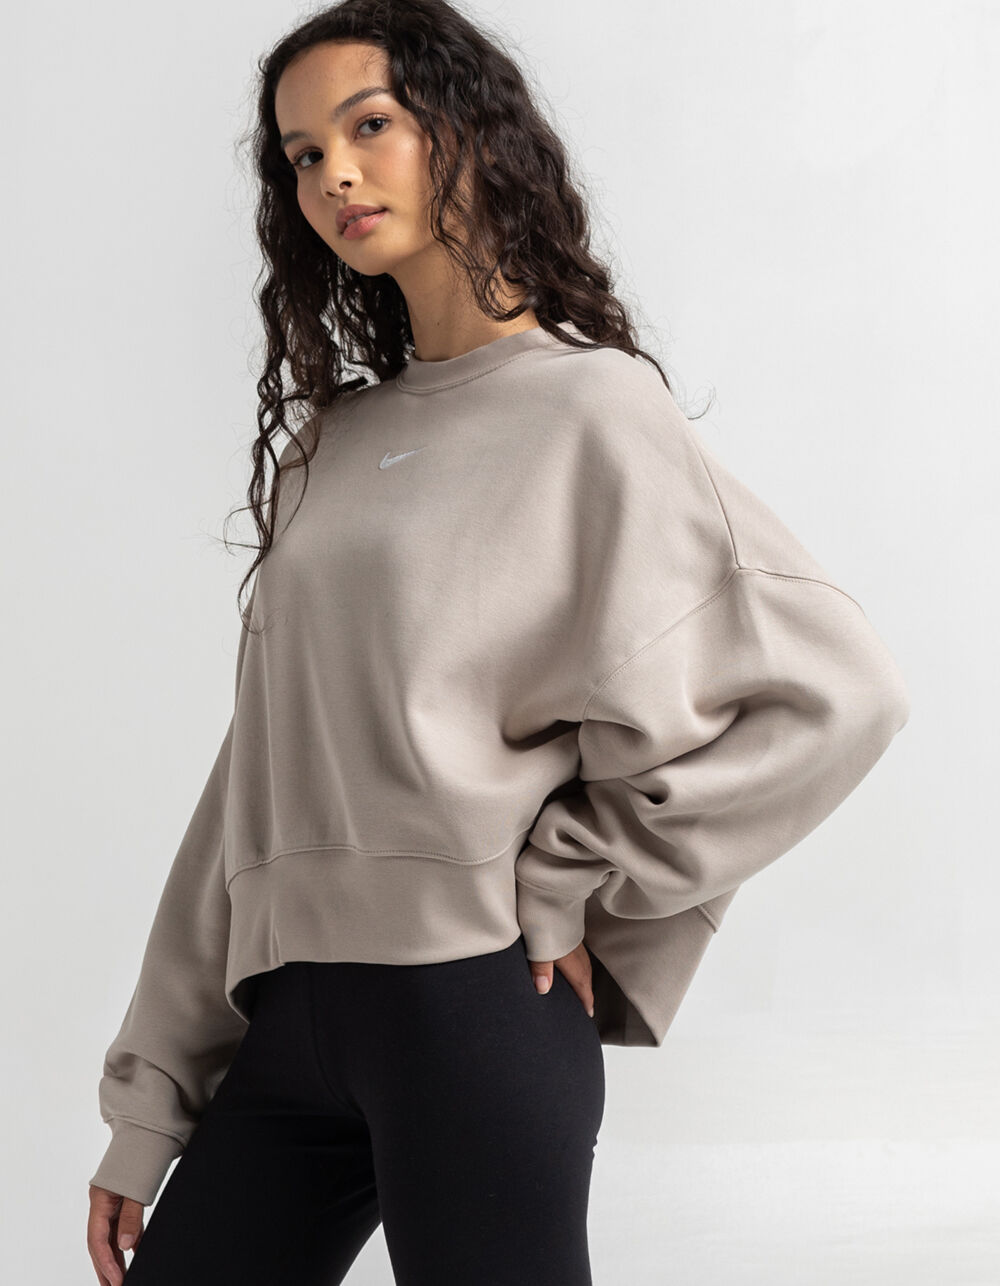 NIKE Sportswear Essential Womens Oversized Crew Sweatshirt - CREAM | Tillys